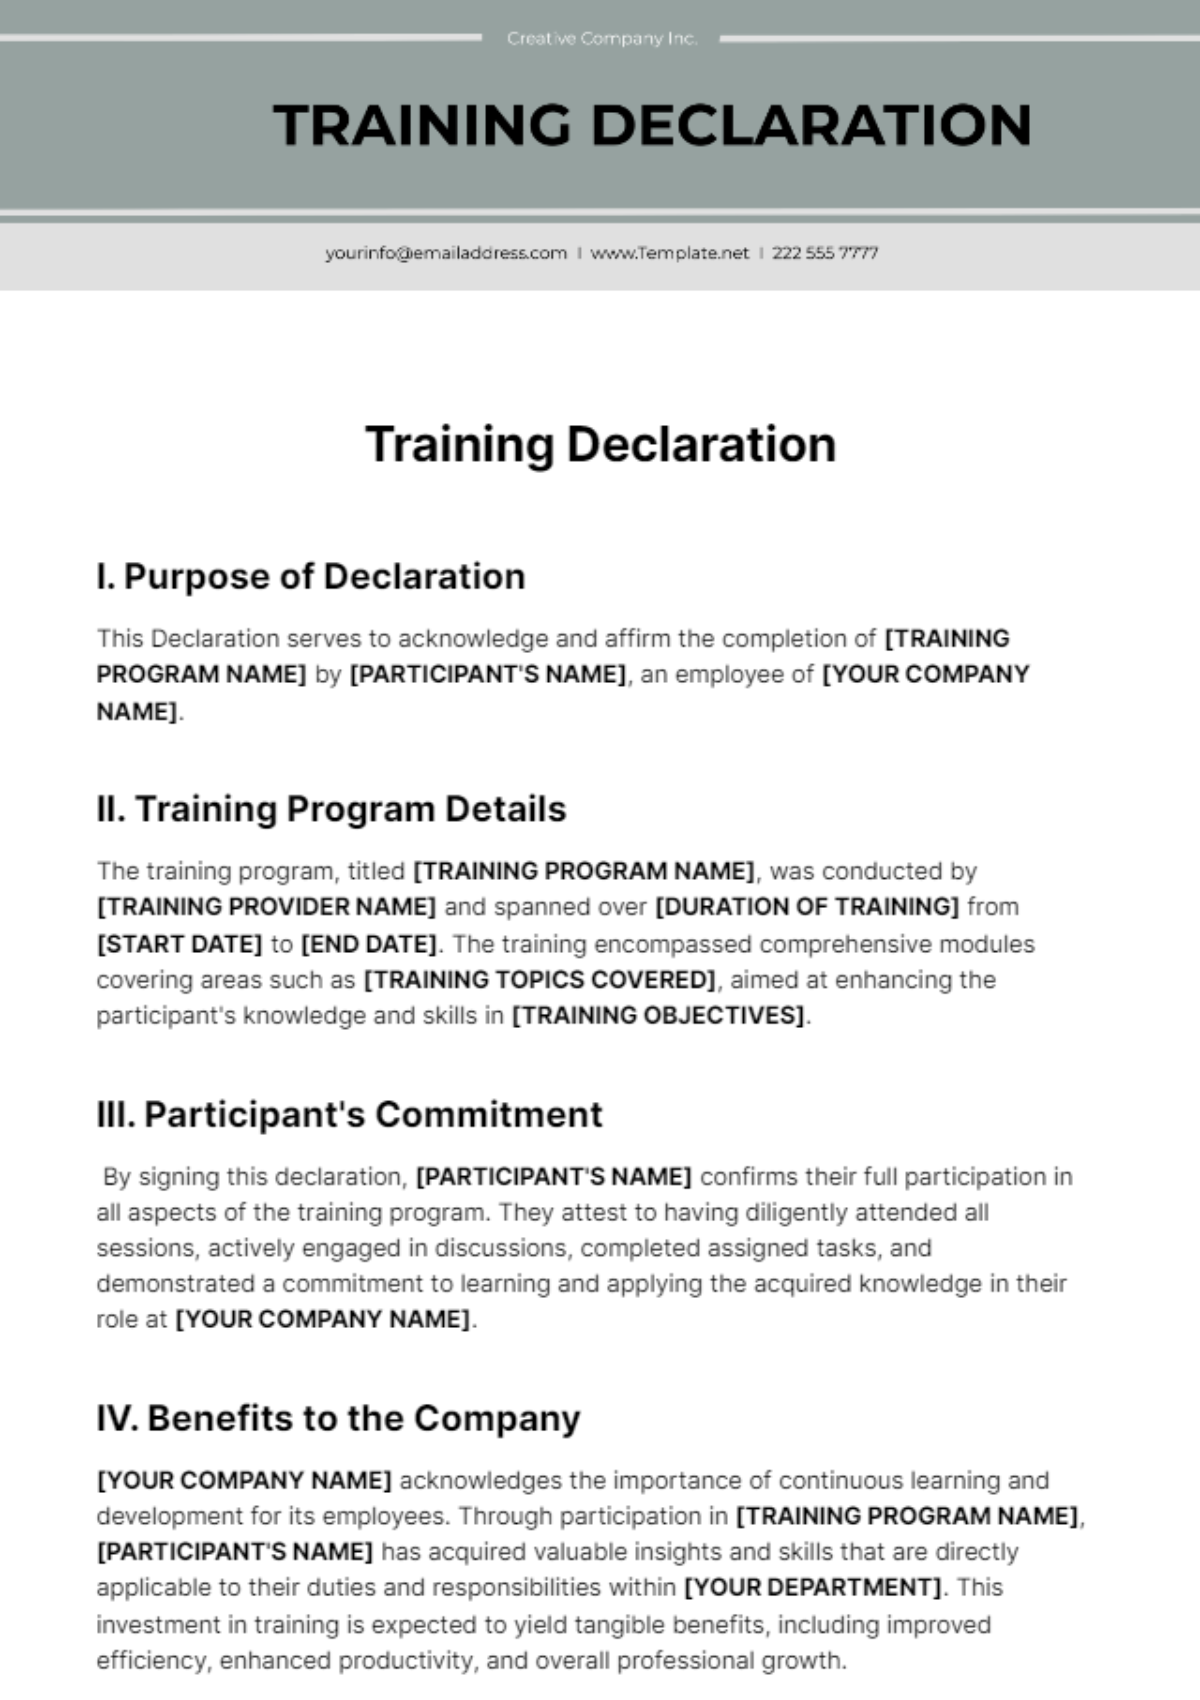 Training Declaration Template